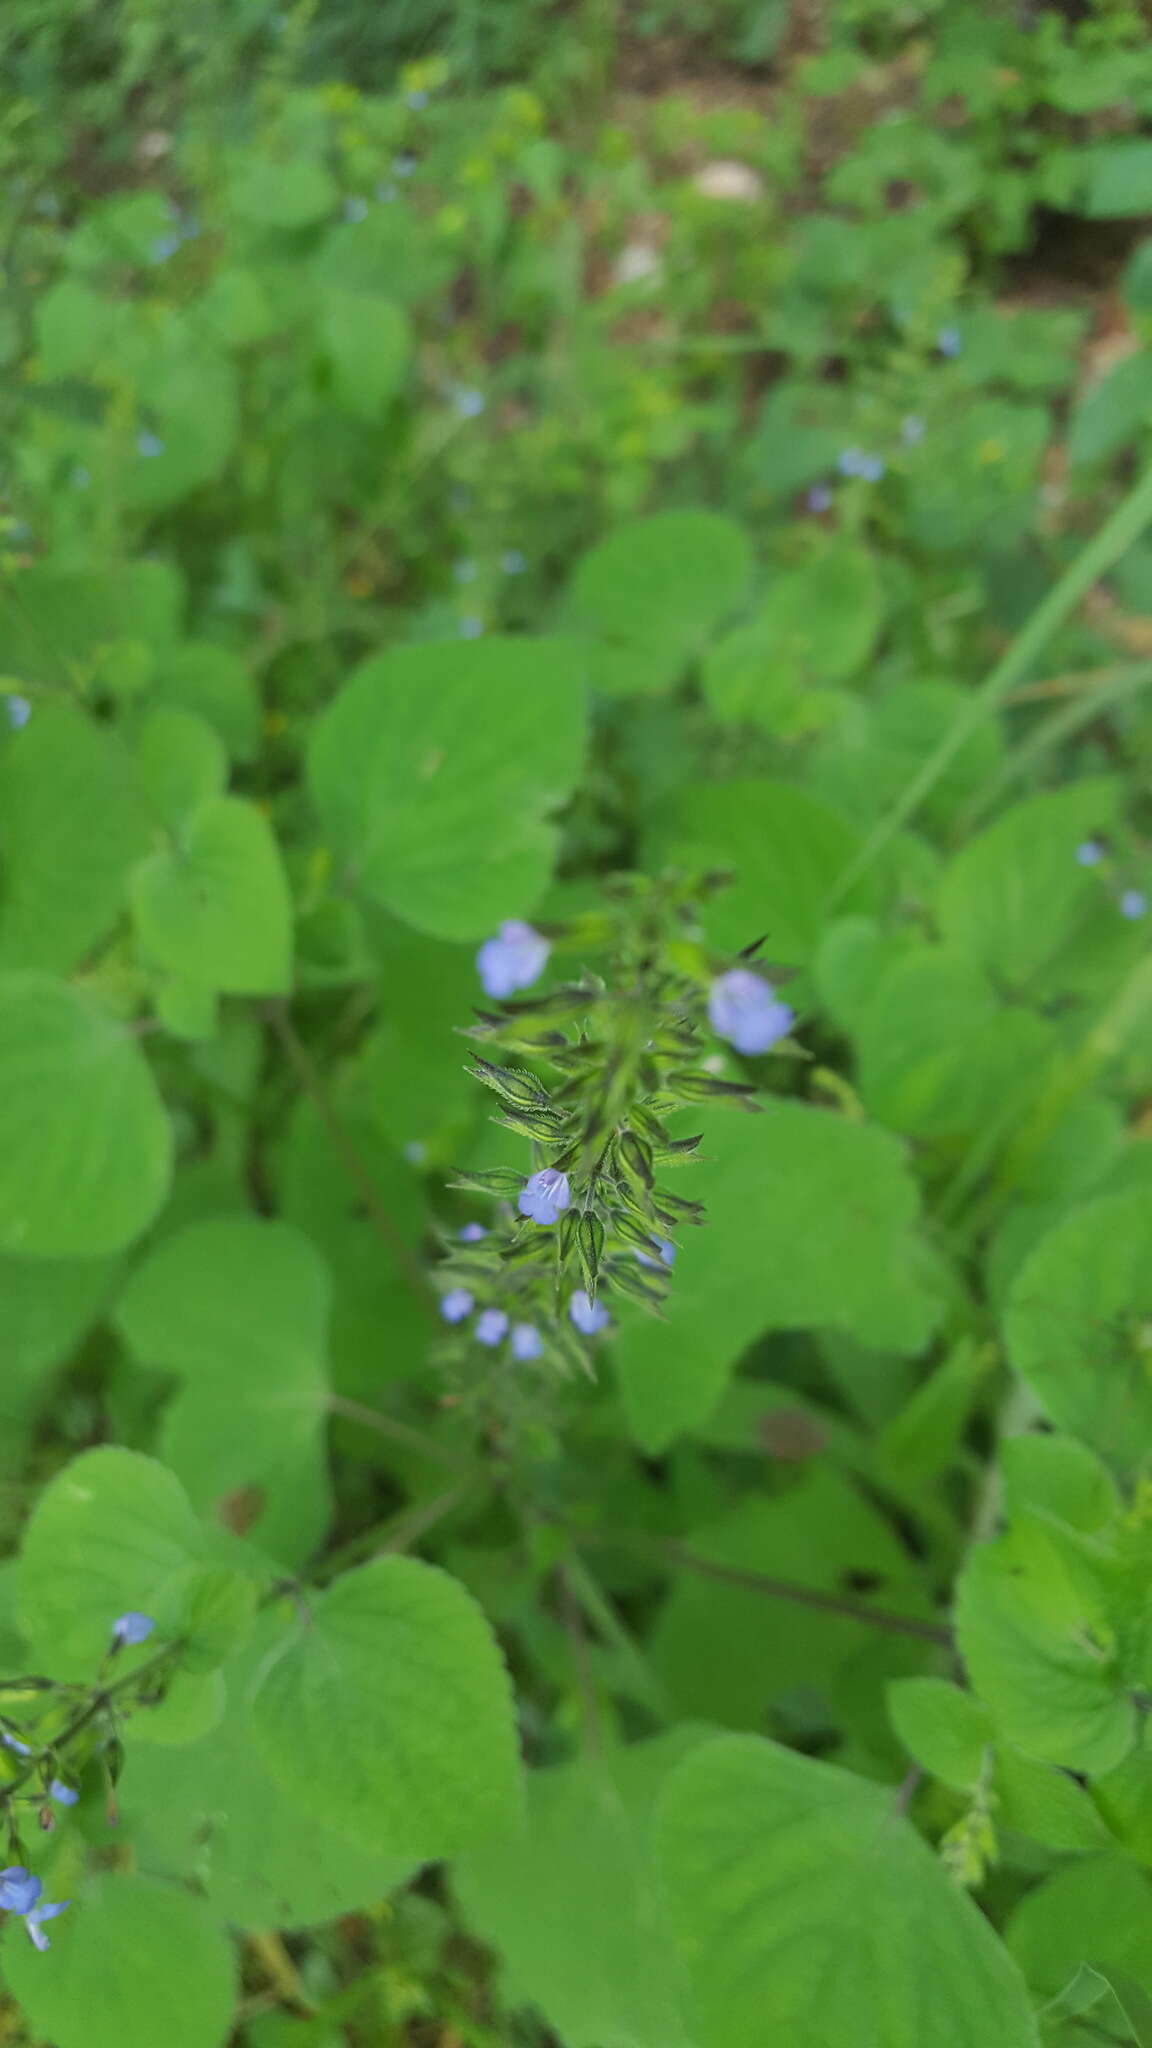 Imagem de Salvia tiliifolia Vahl